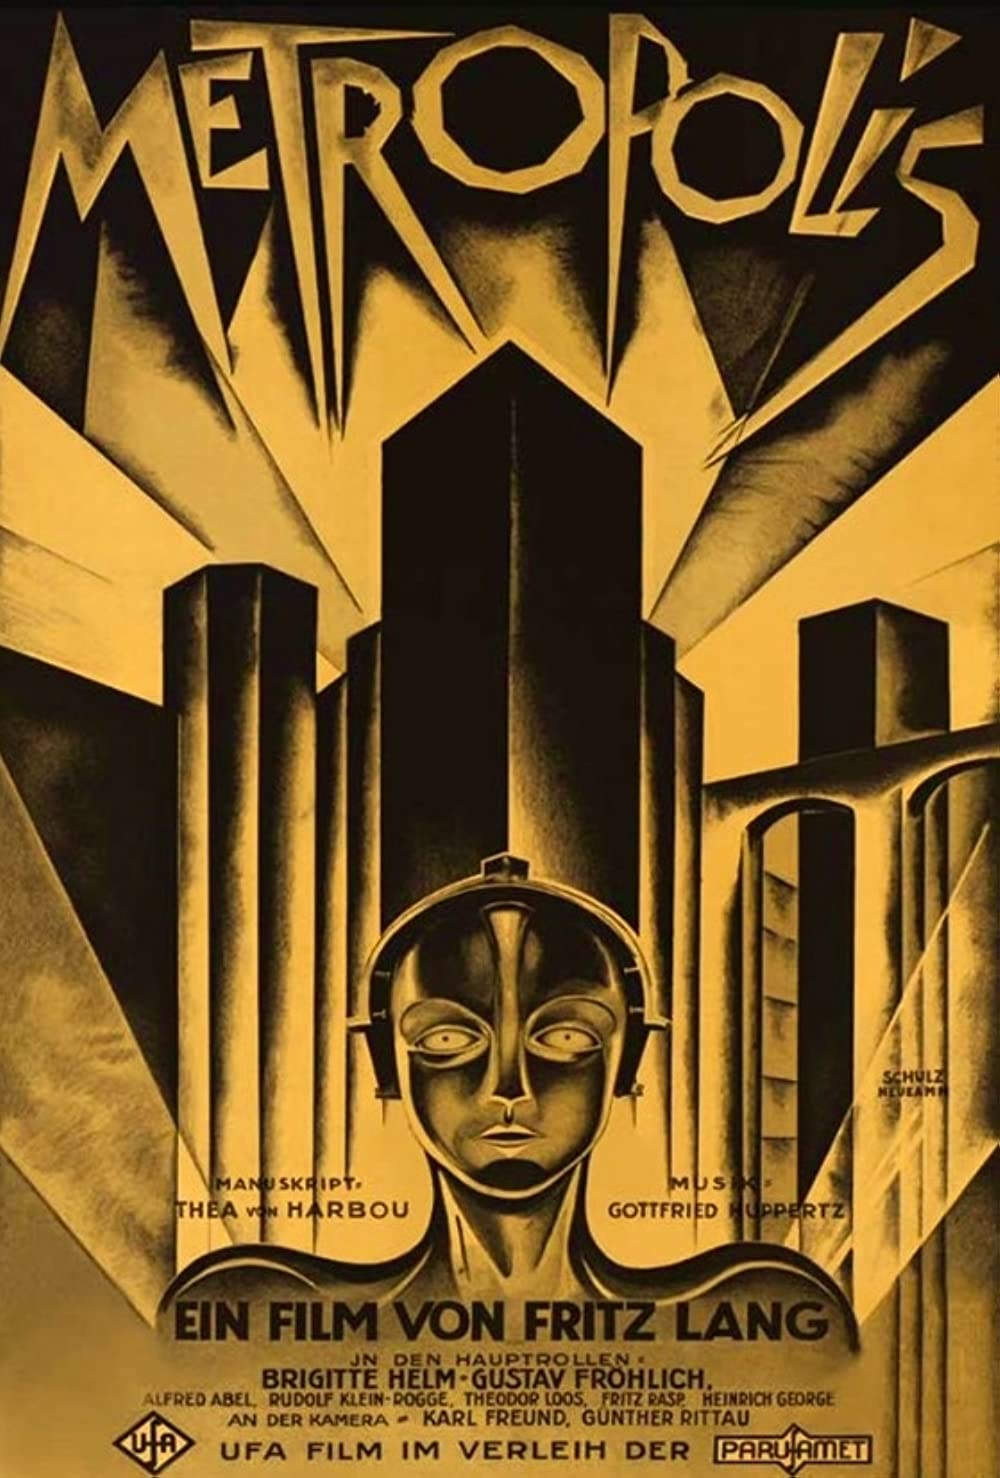 Film poster for Fritz Lang